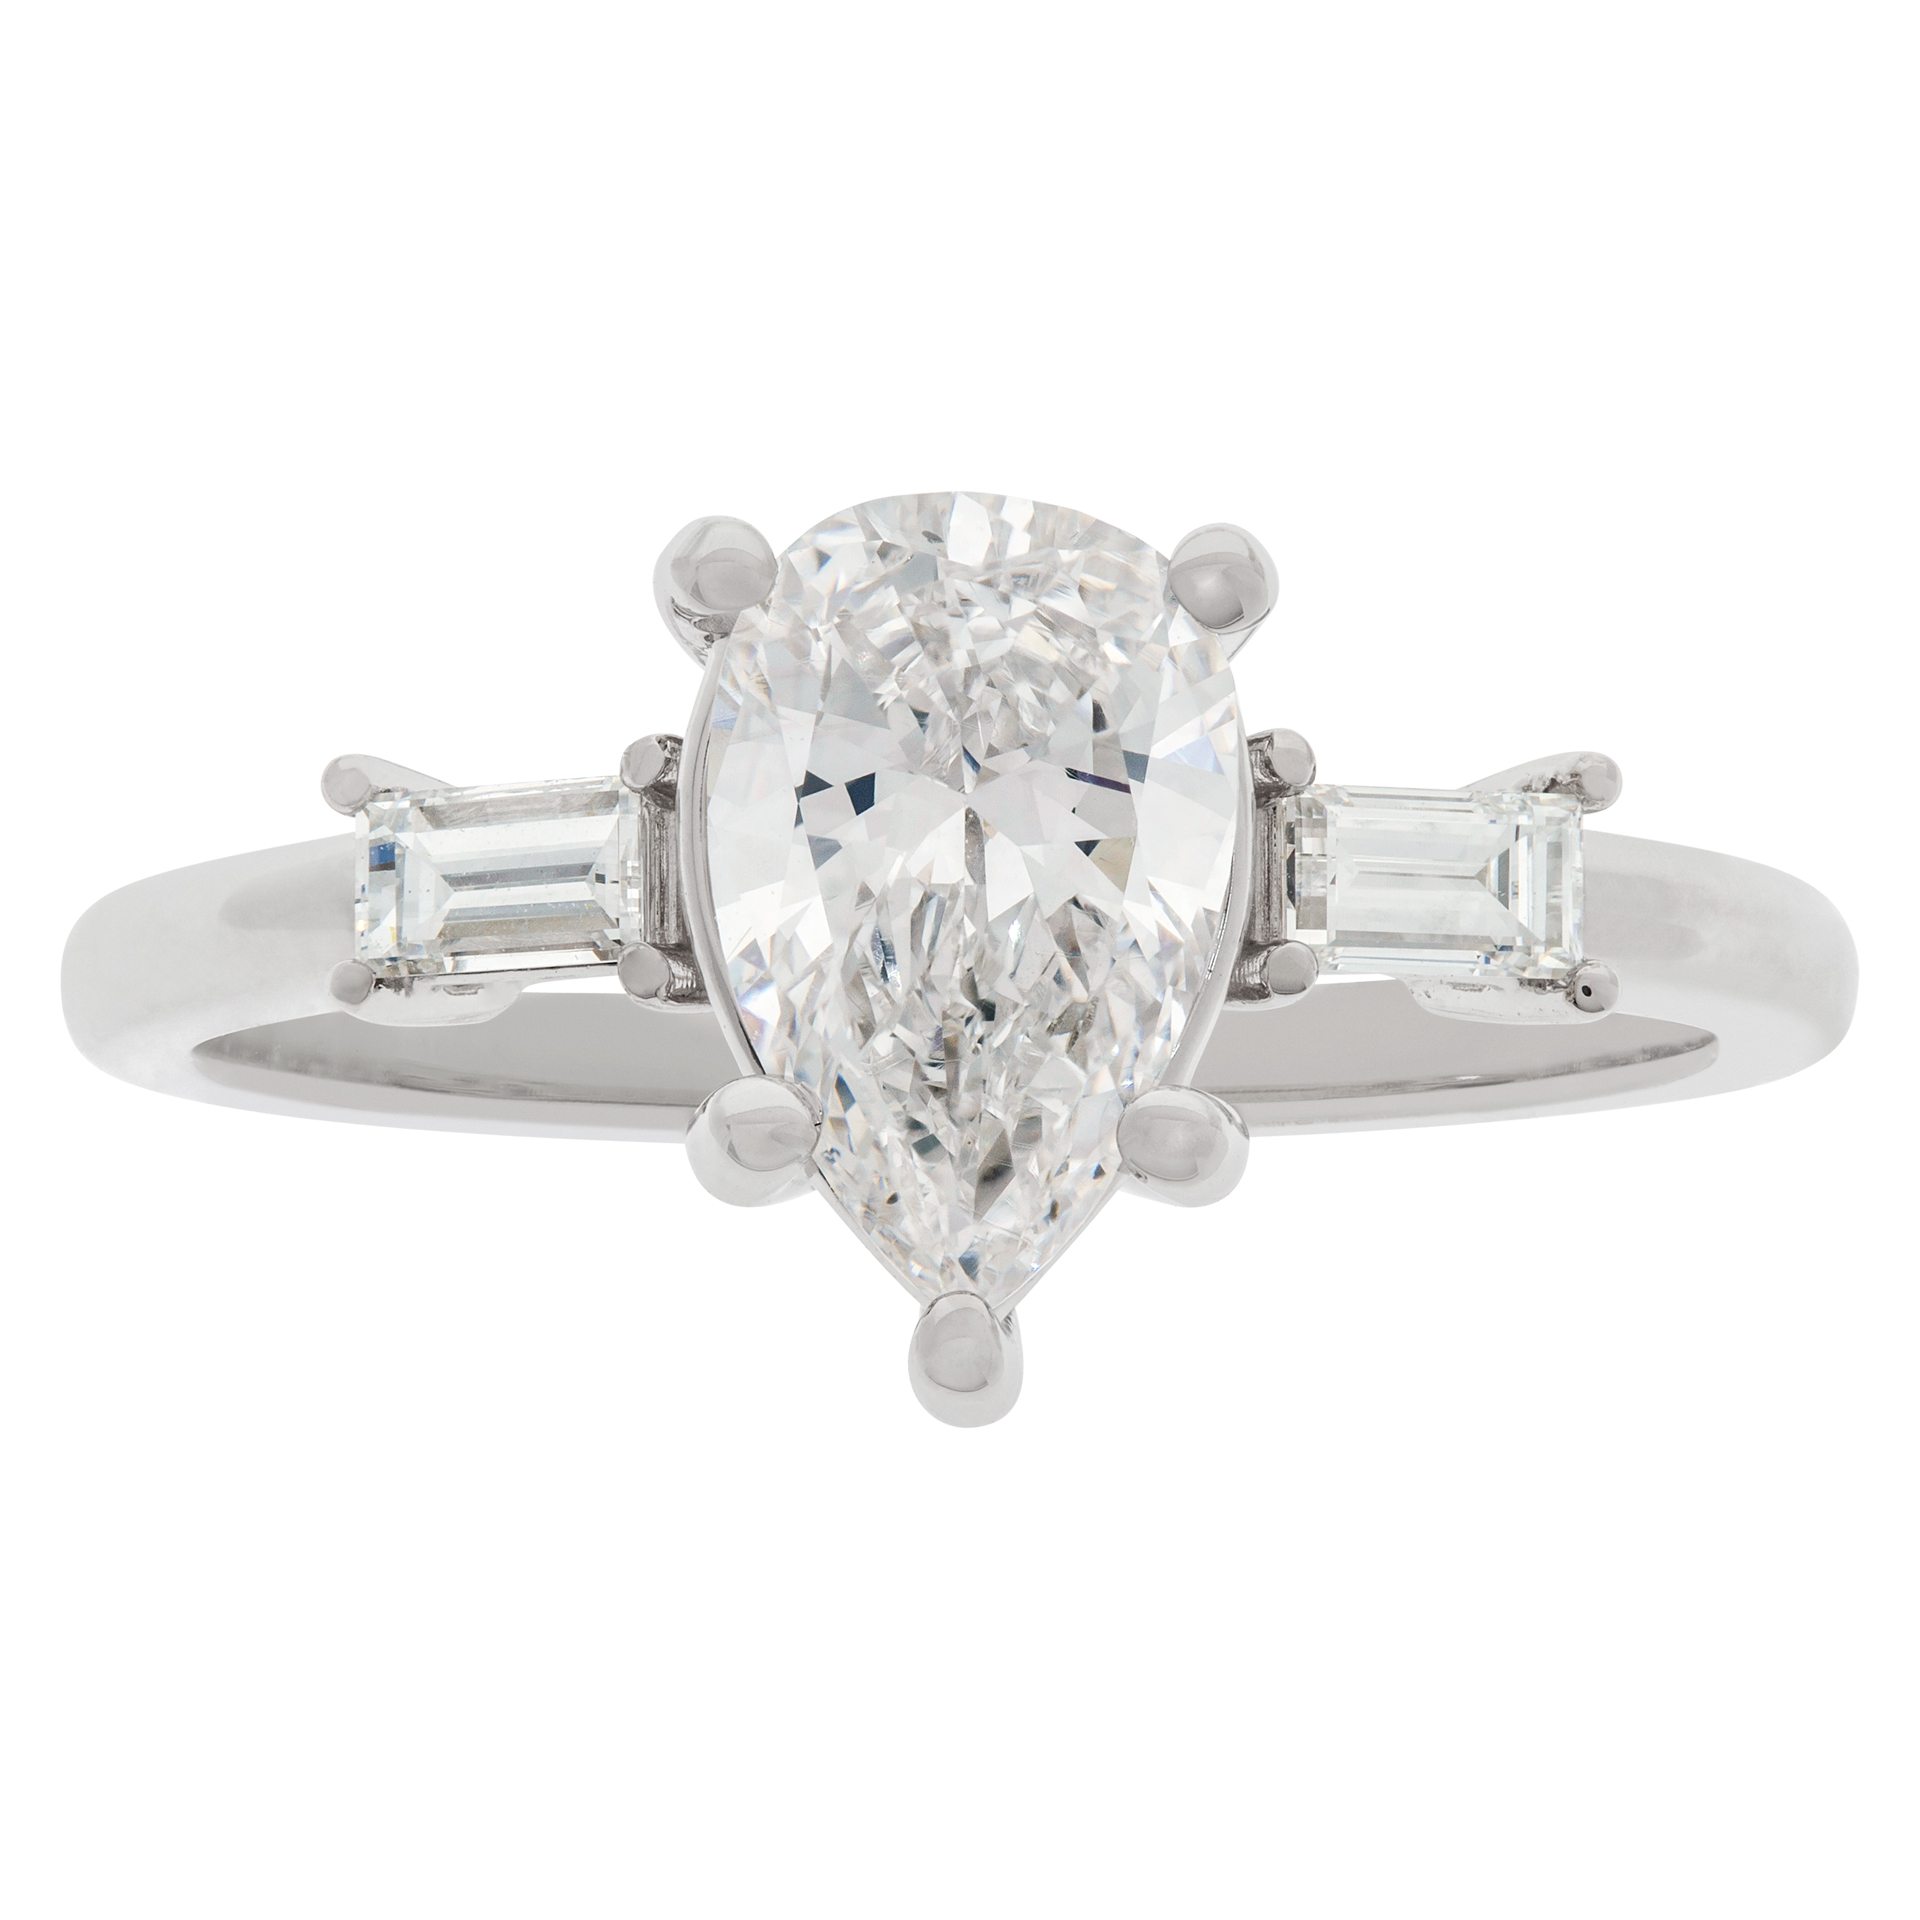 GIA certified pear brilliant cut 1.19 carat diamond (F color, SI1 clarity) ring